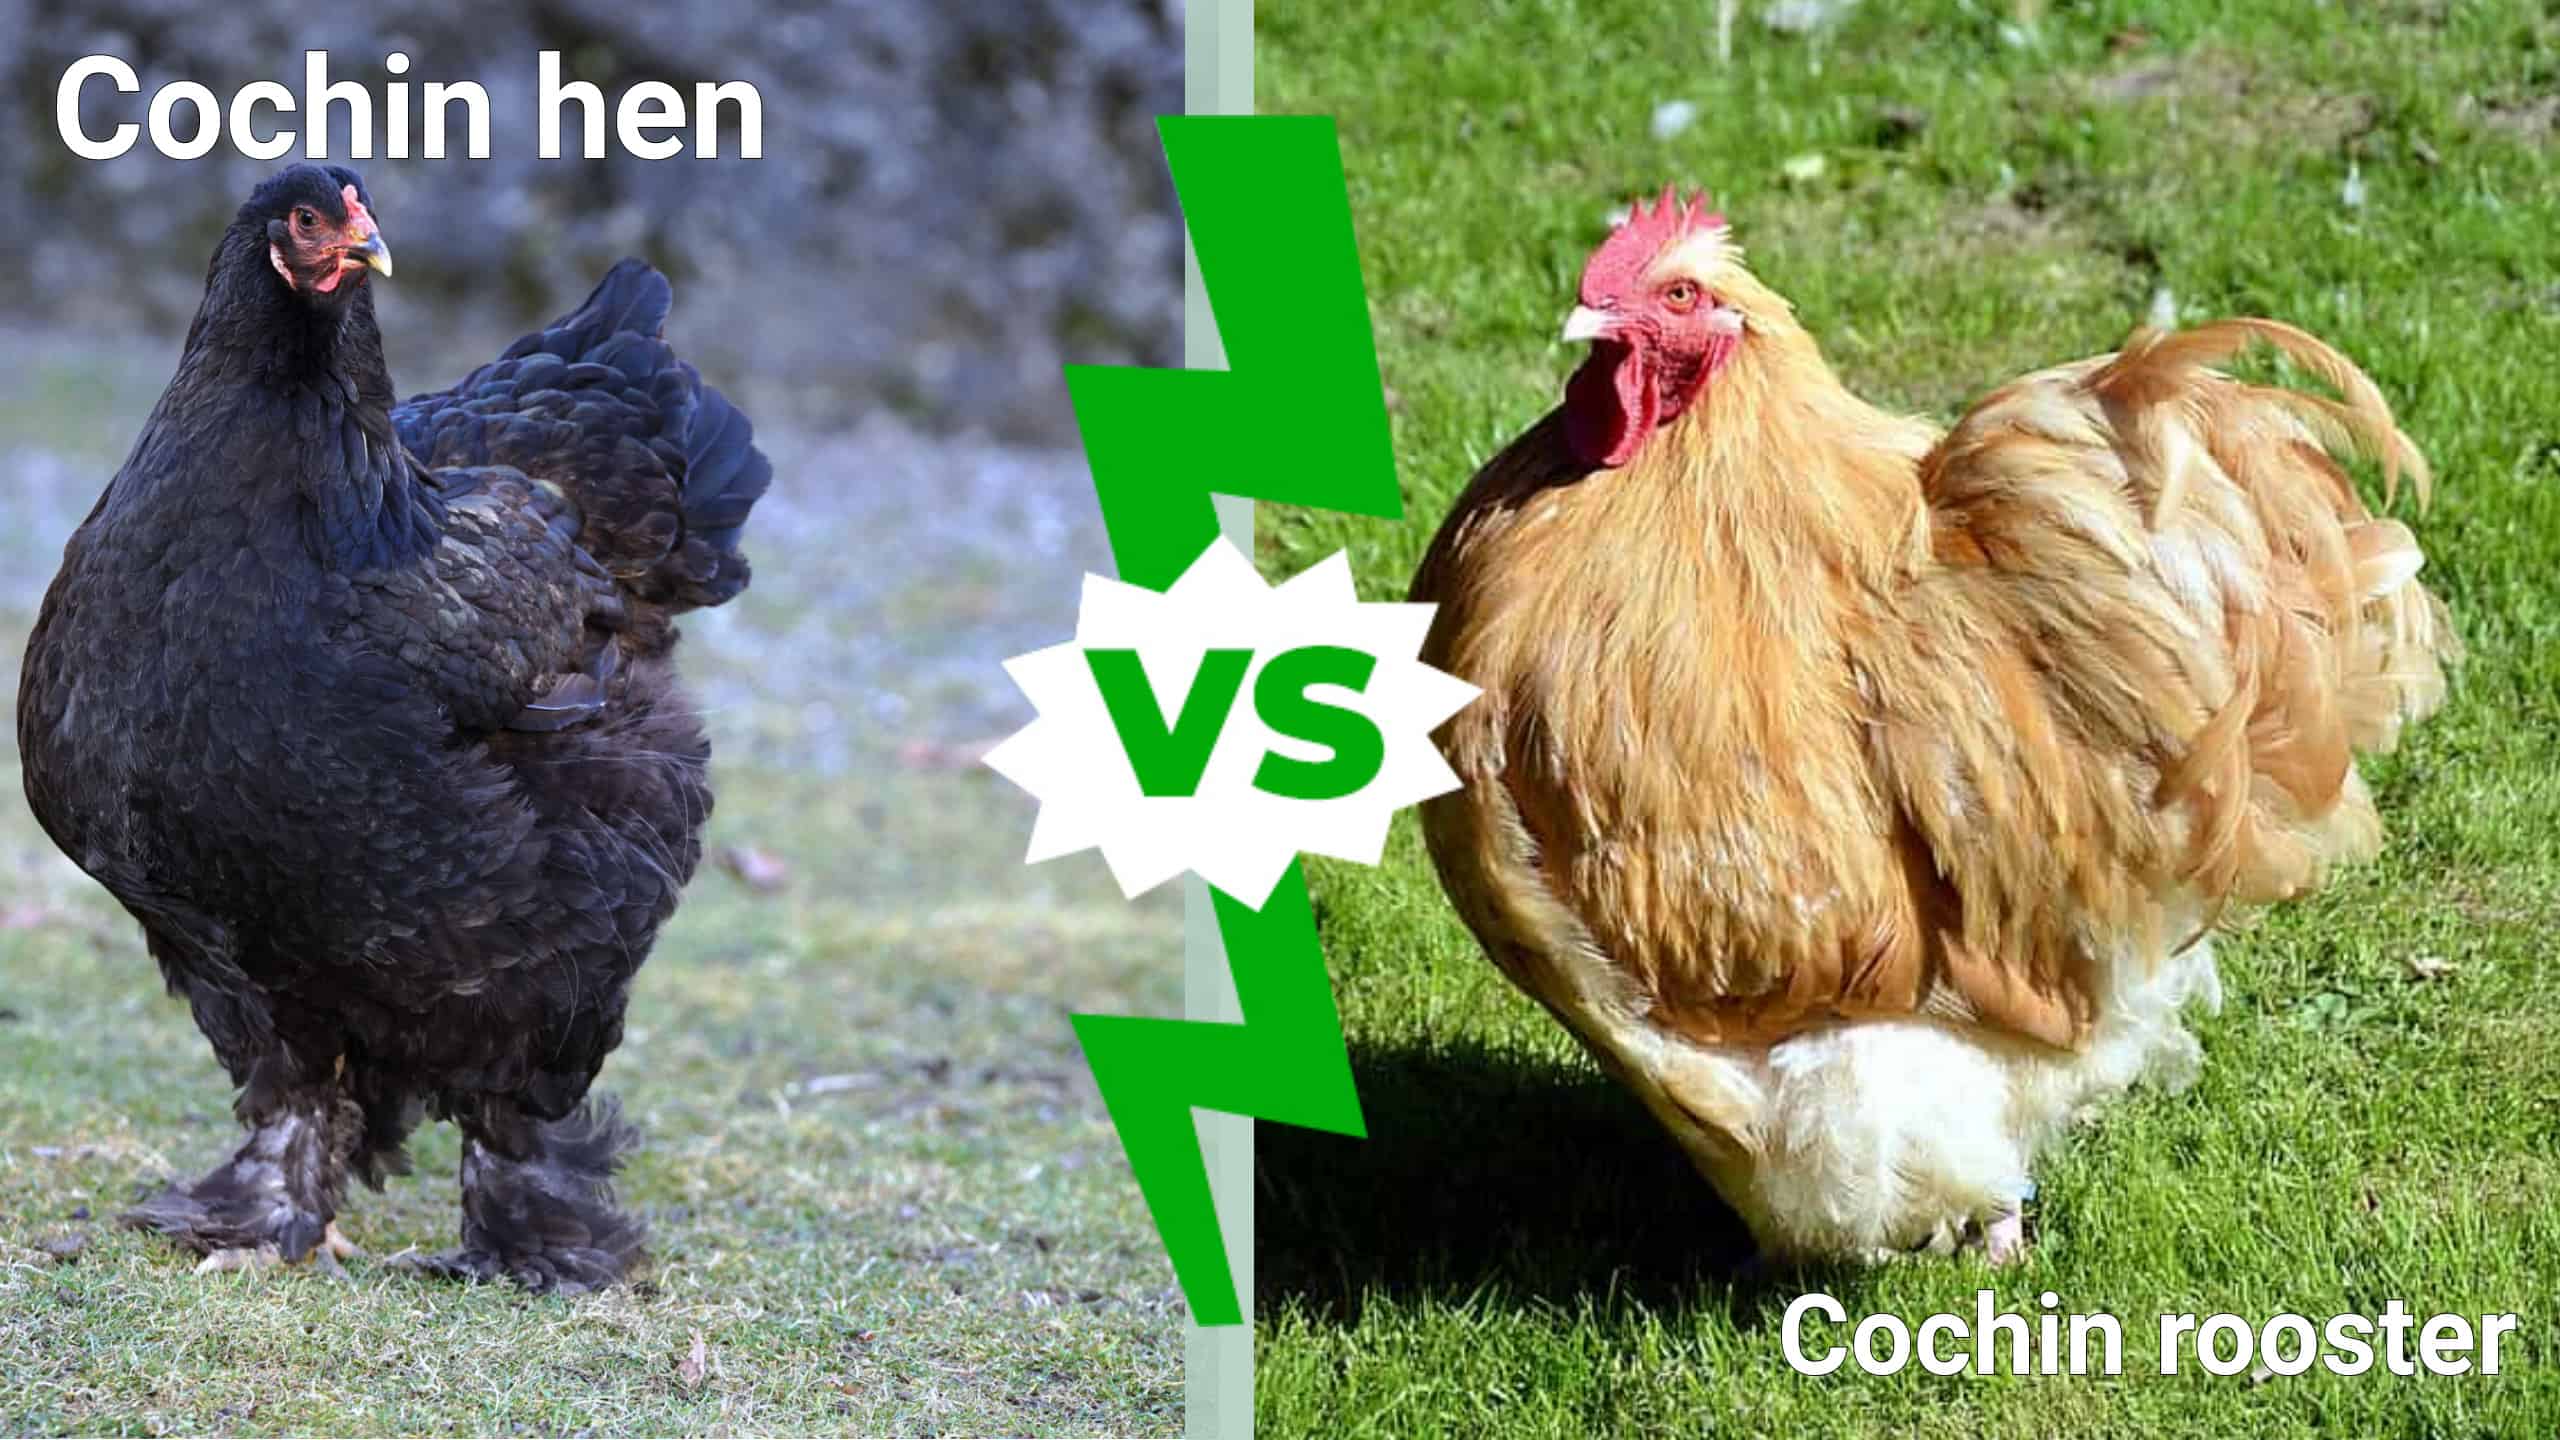 Cochin hen vs Cochin rooster